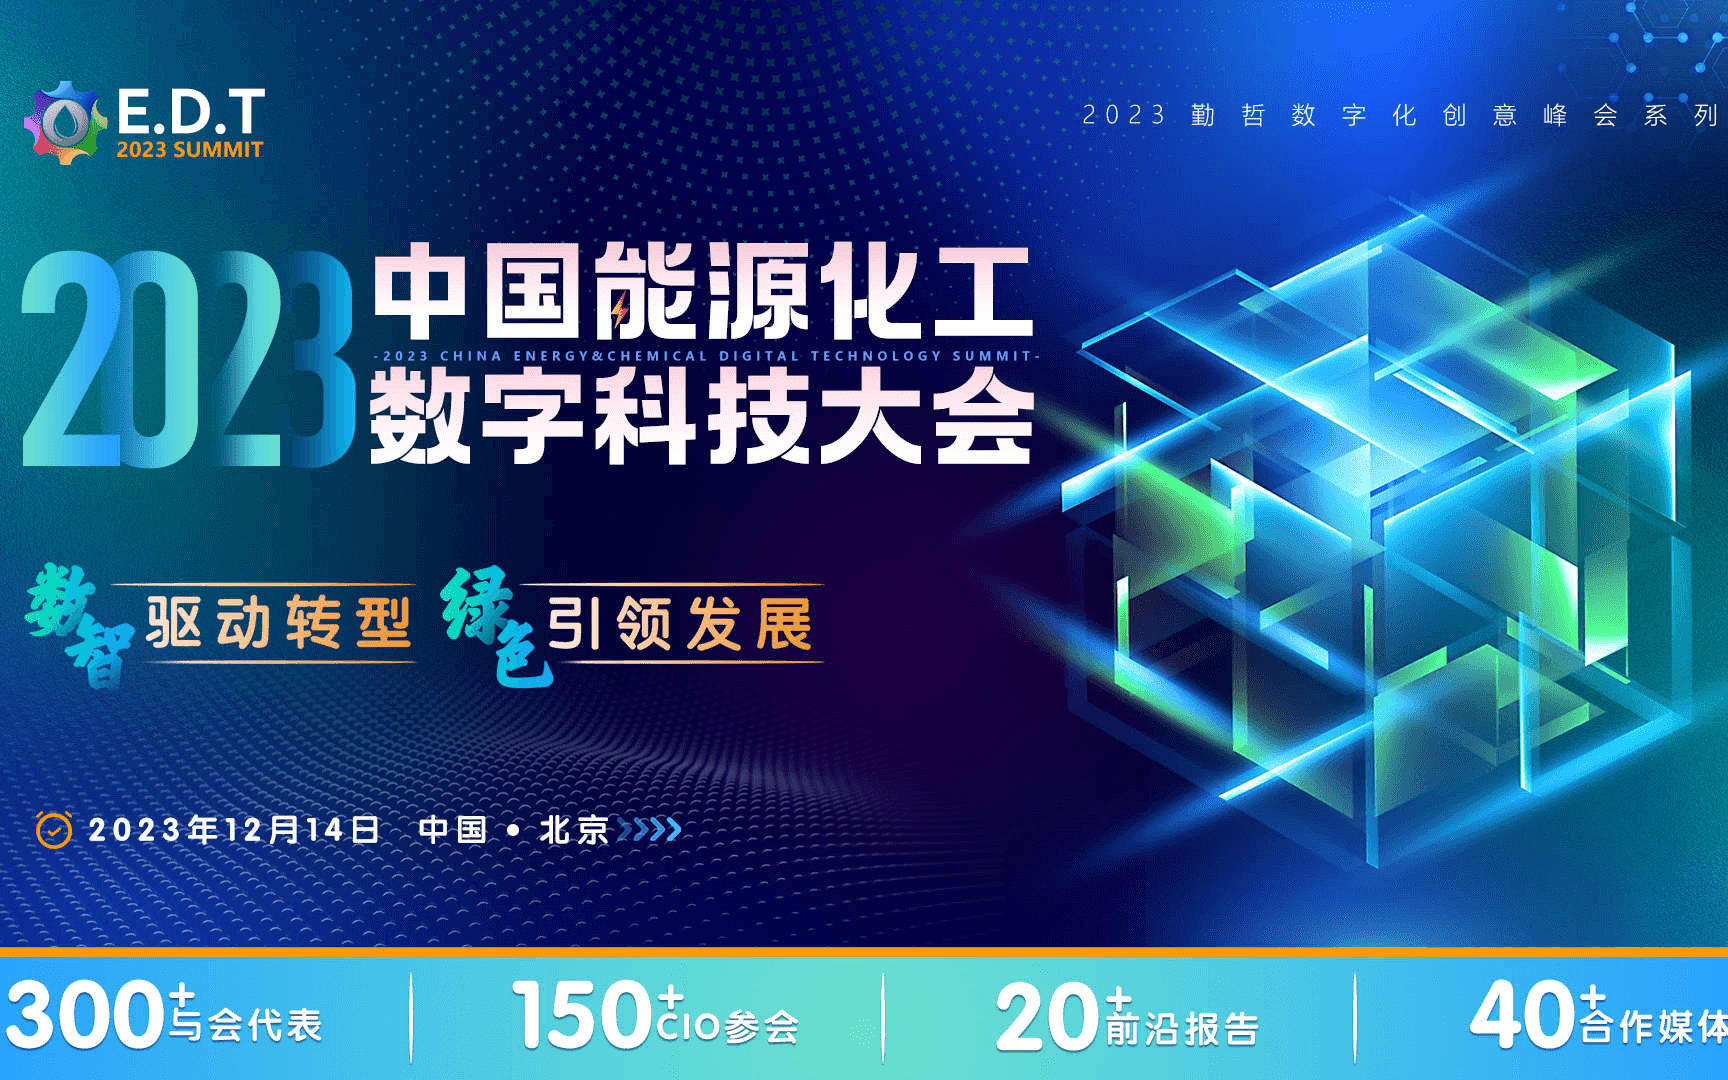 EDT 2023 中國能源化工數字科技大會